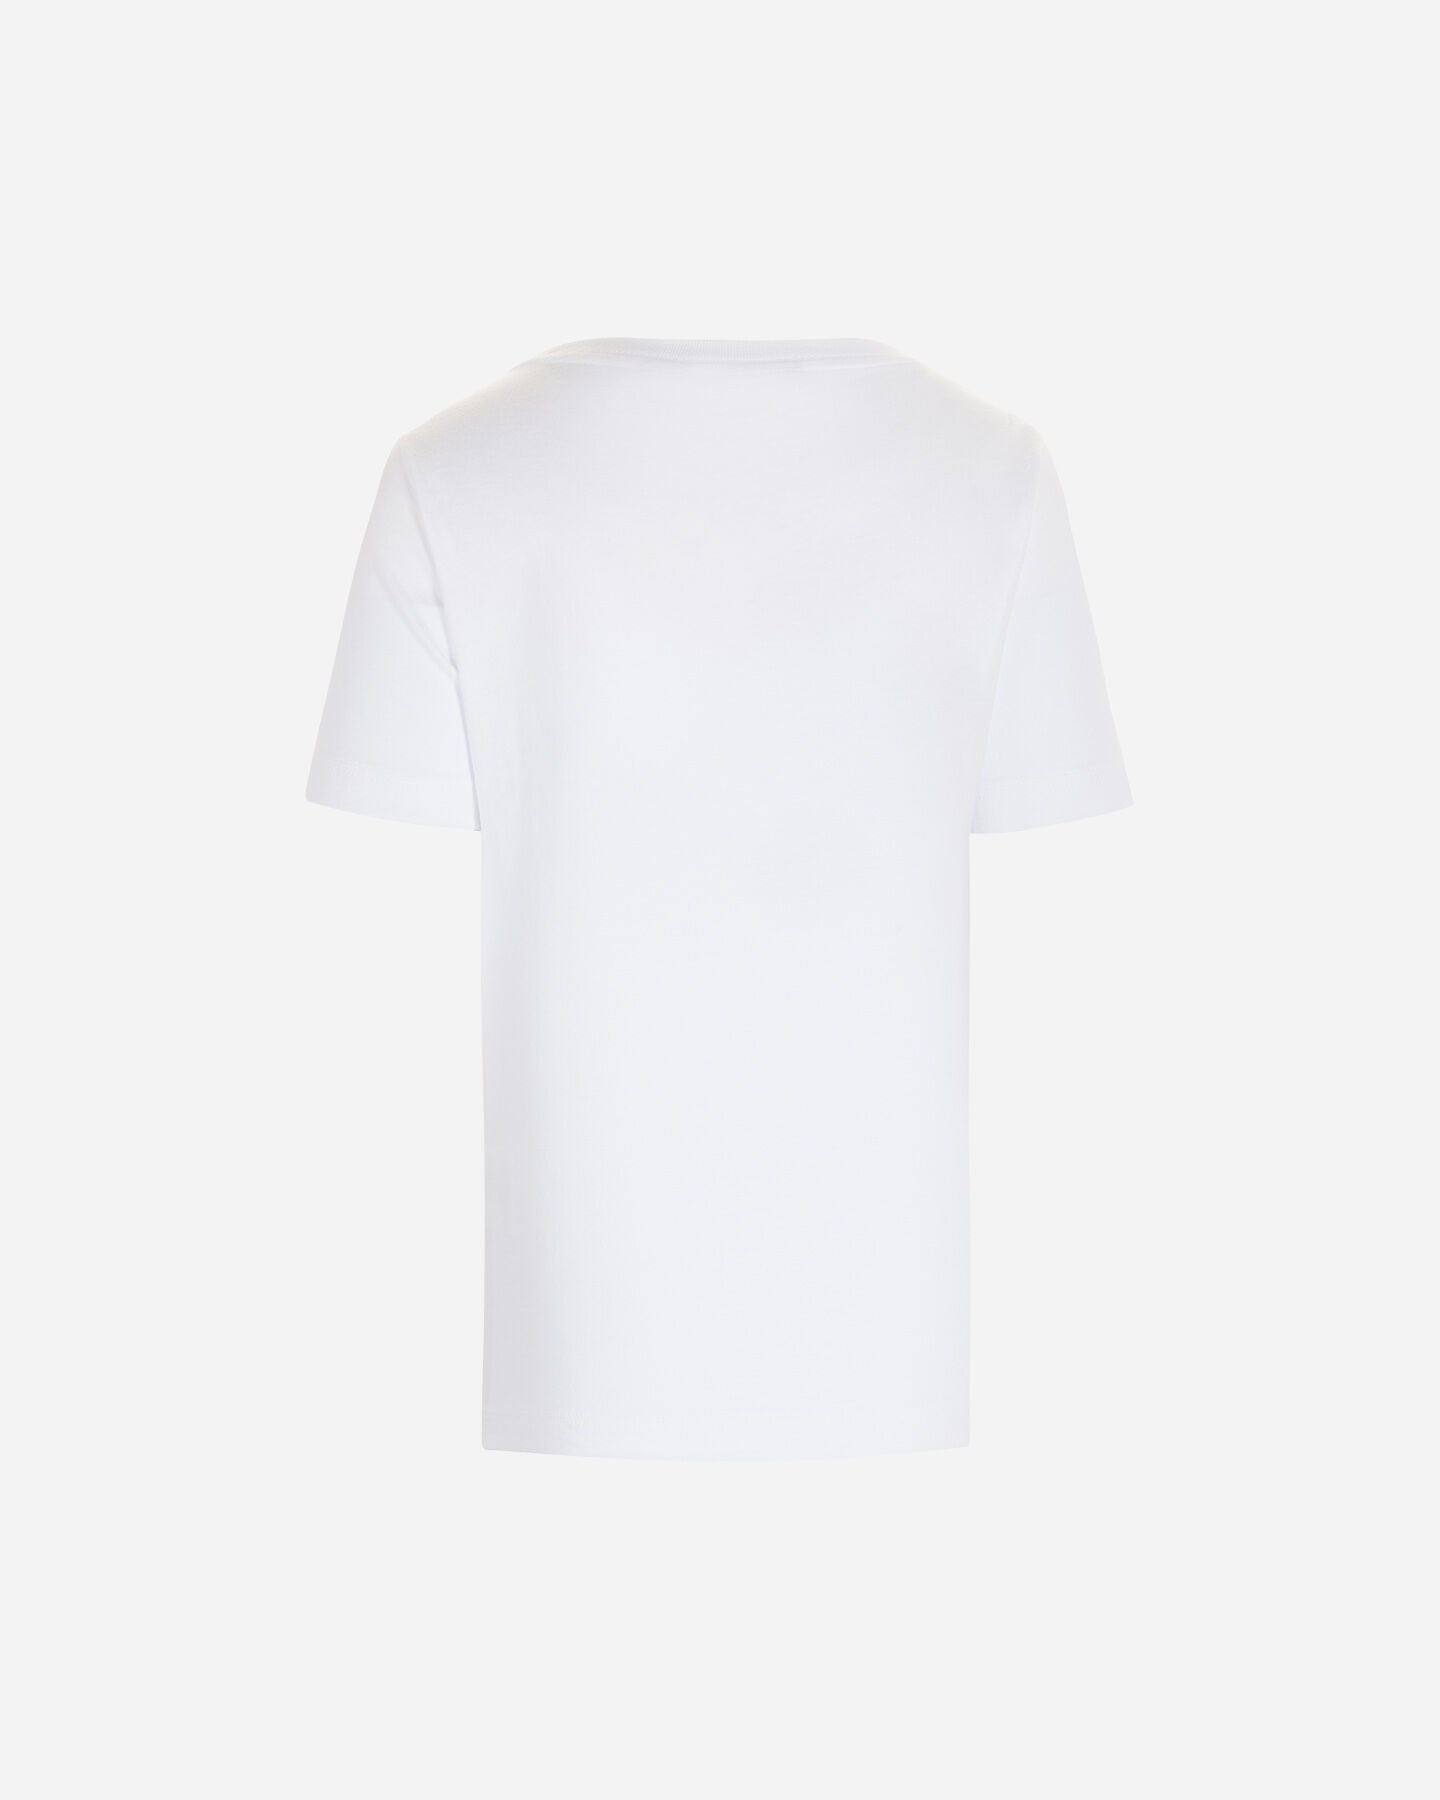  T-Shirt NORTH SAILS PLOGO JR S4104820|0101|6 scatto 1